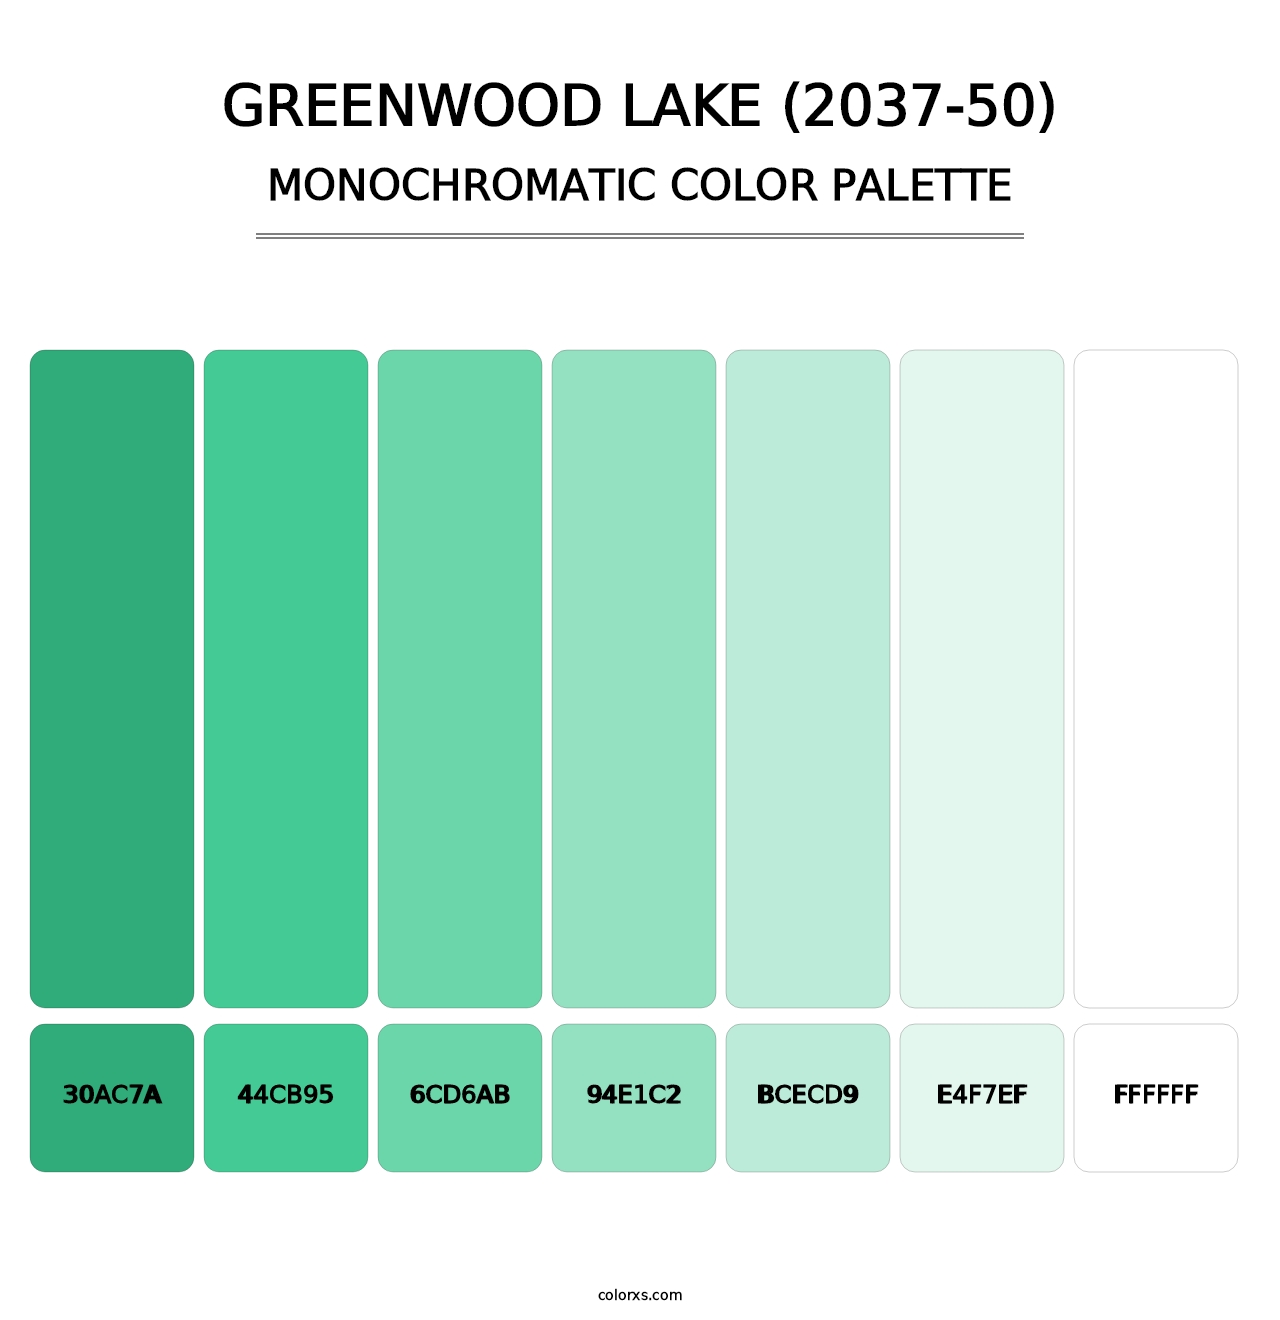 Greenwood Lake (2037-50) - Monochromatic Color Palette